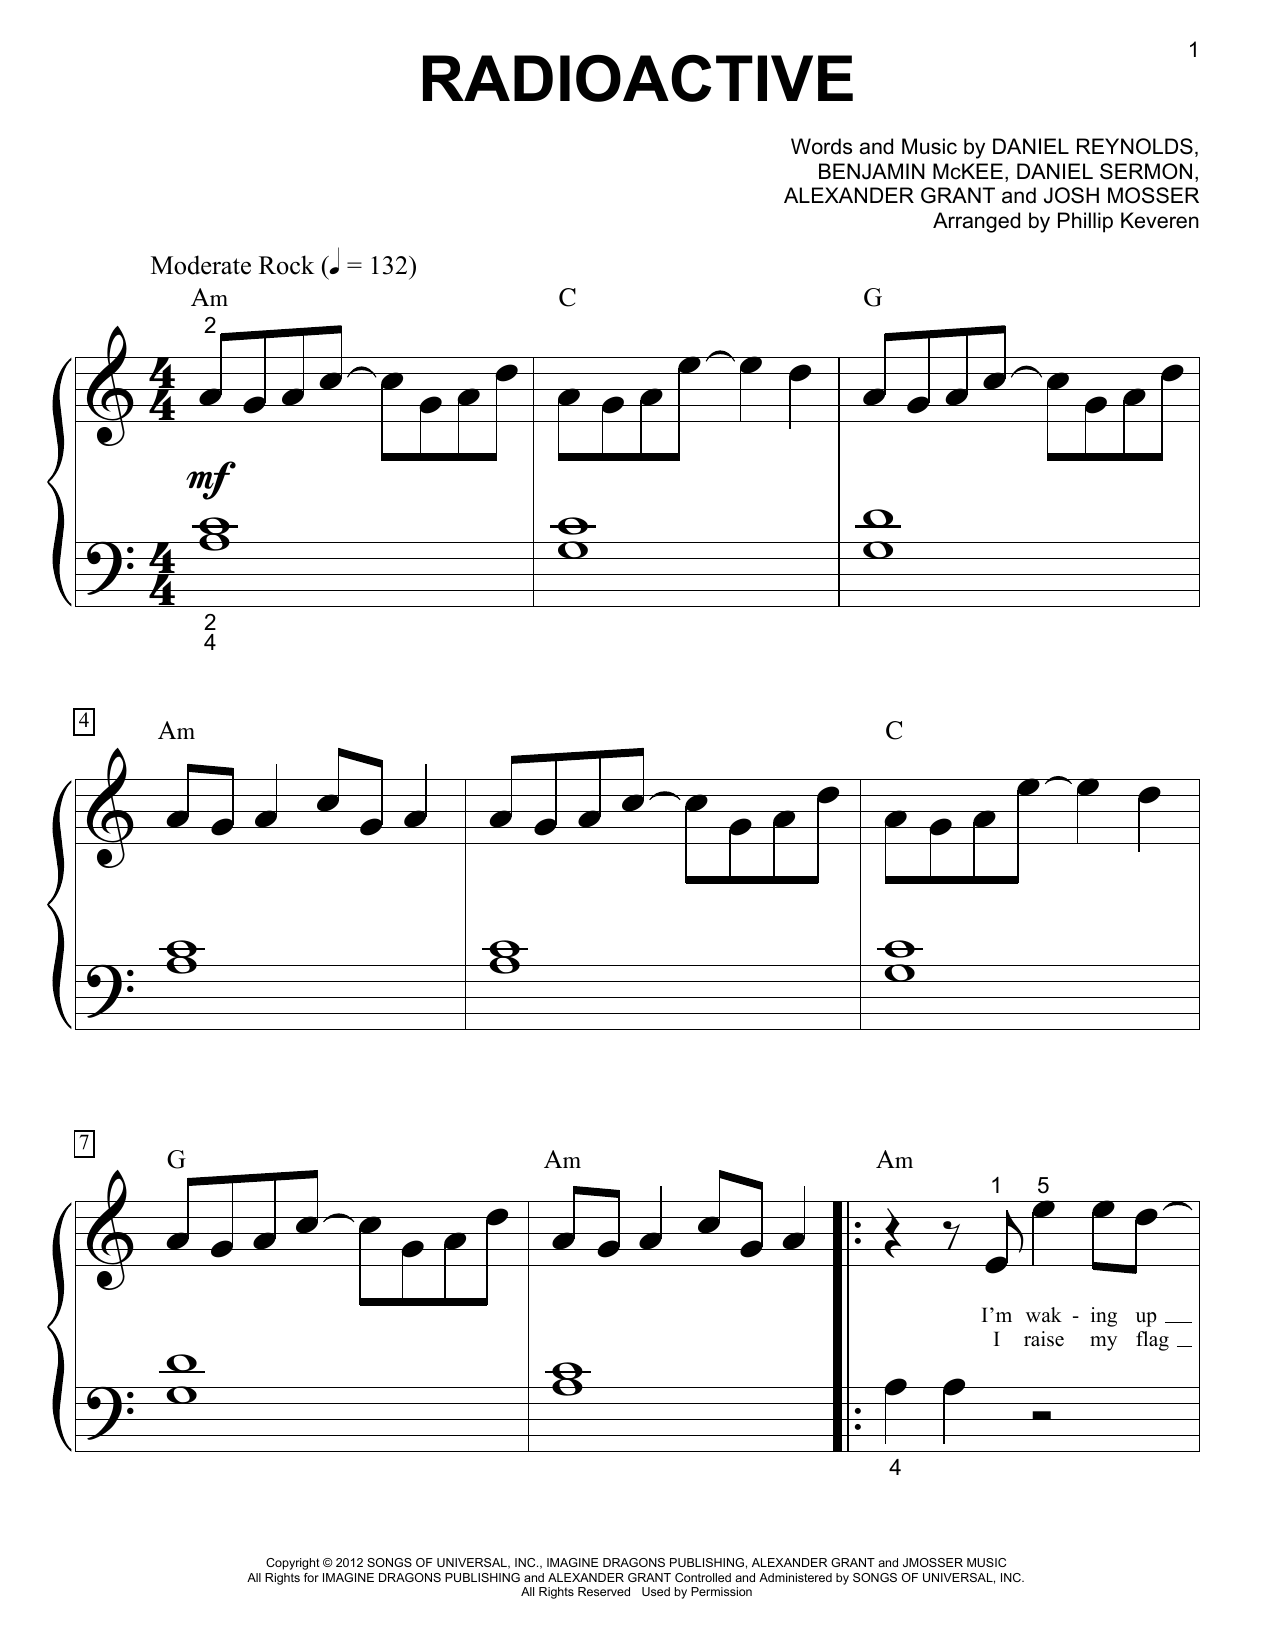 Imagine Dragons Radioactive Sheet Music Notes & Chords for Piano (Big Notes) - Download or Print PDF